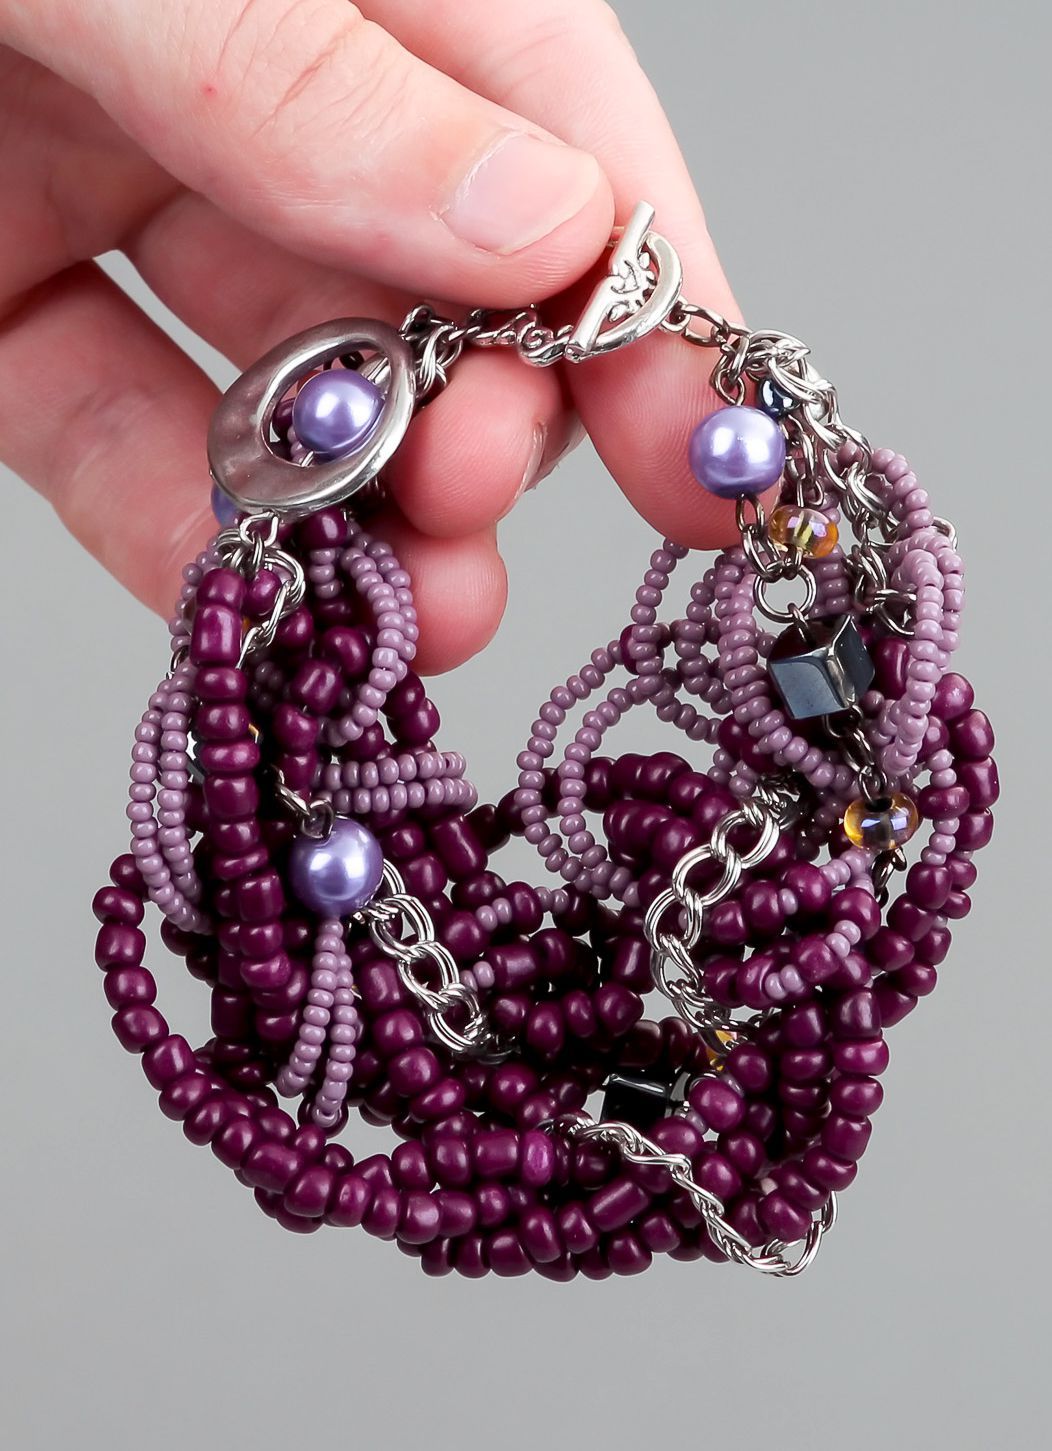 Wrist bracelet of ceramic pearls & beads photo 5